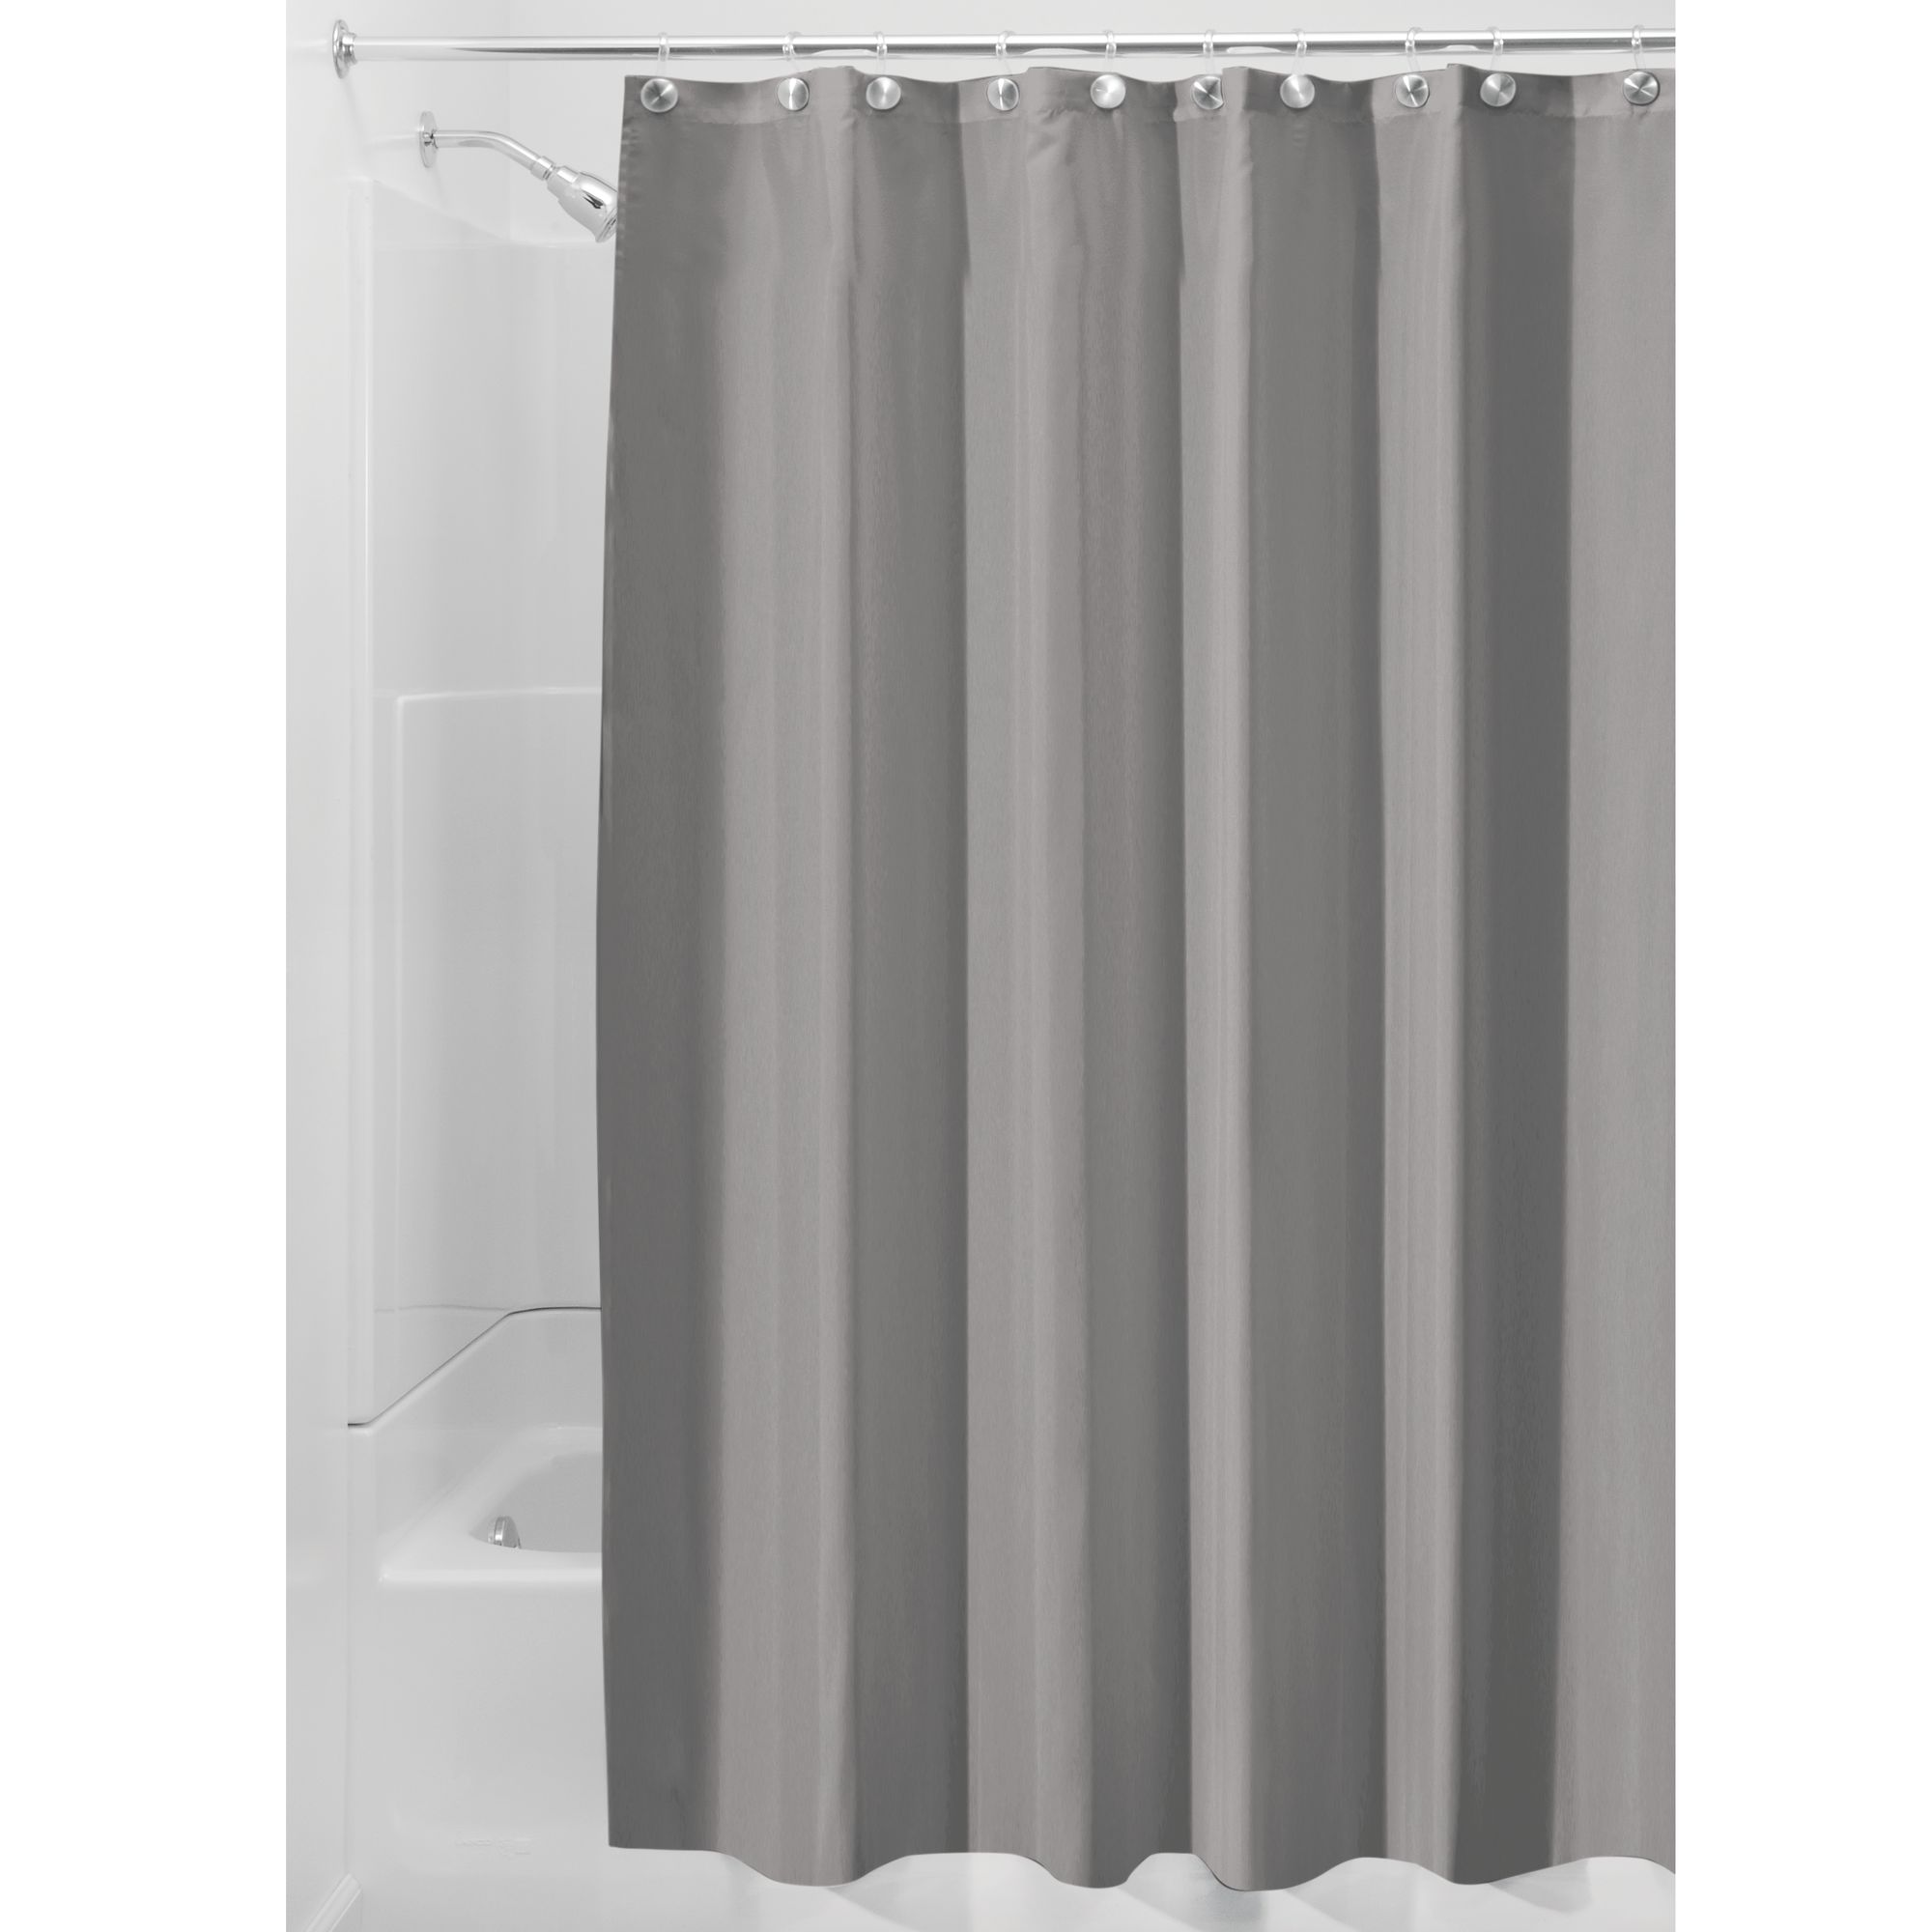 InterDesign Waterproof Fabric Shower Curtain Liner, Standard 72" x 72", Gray